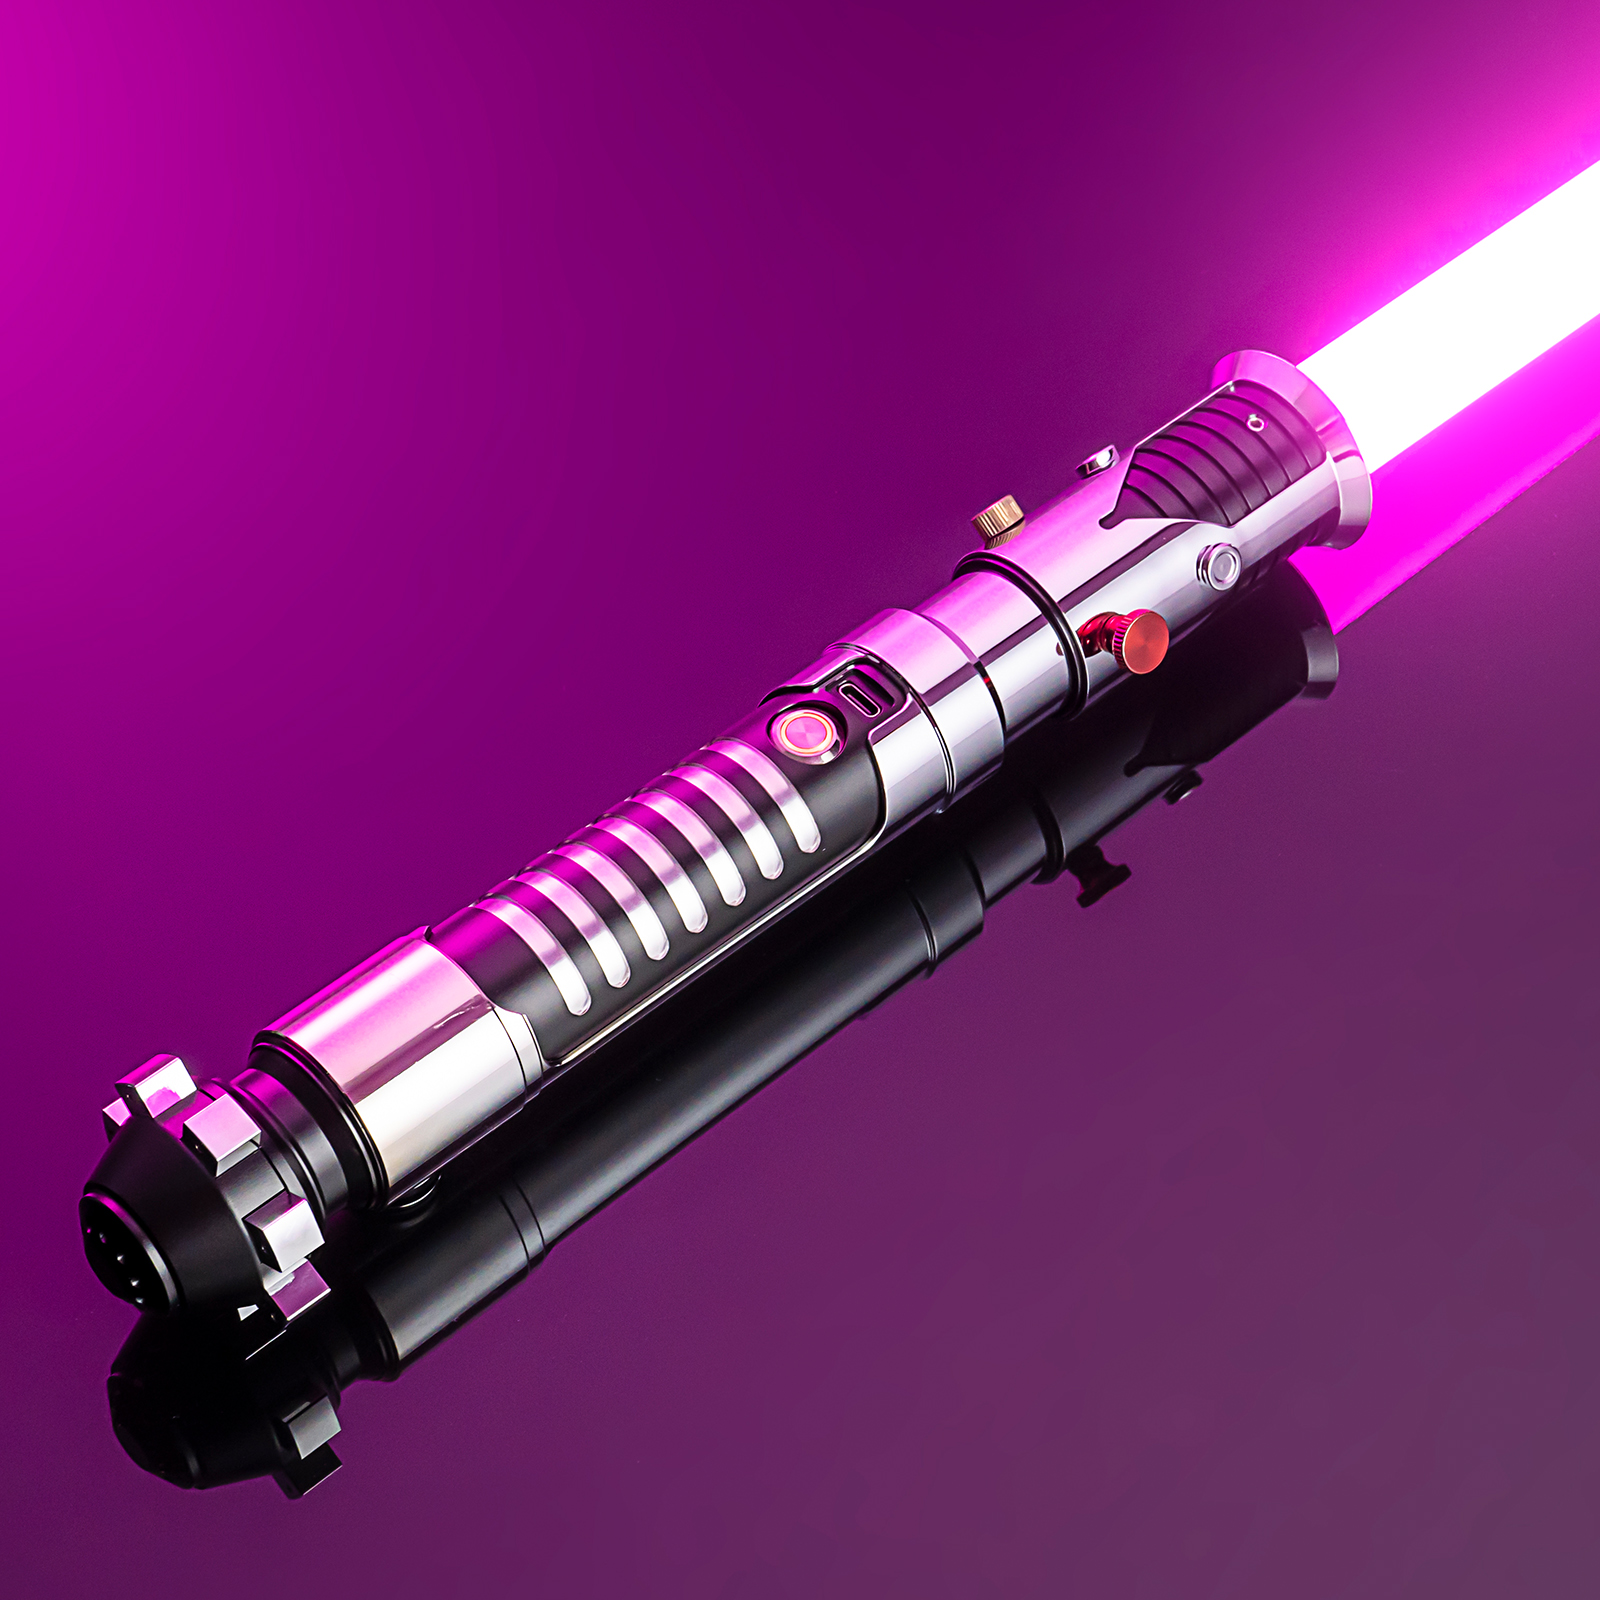 Original Republic Kenobi neopixel lightsaber